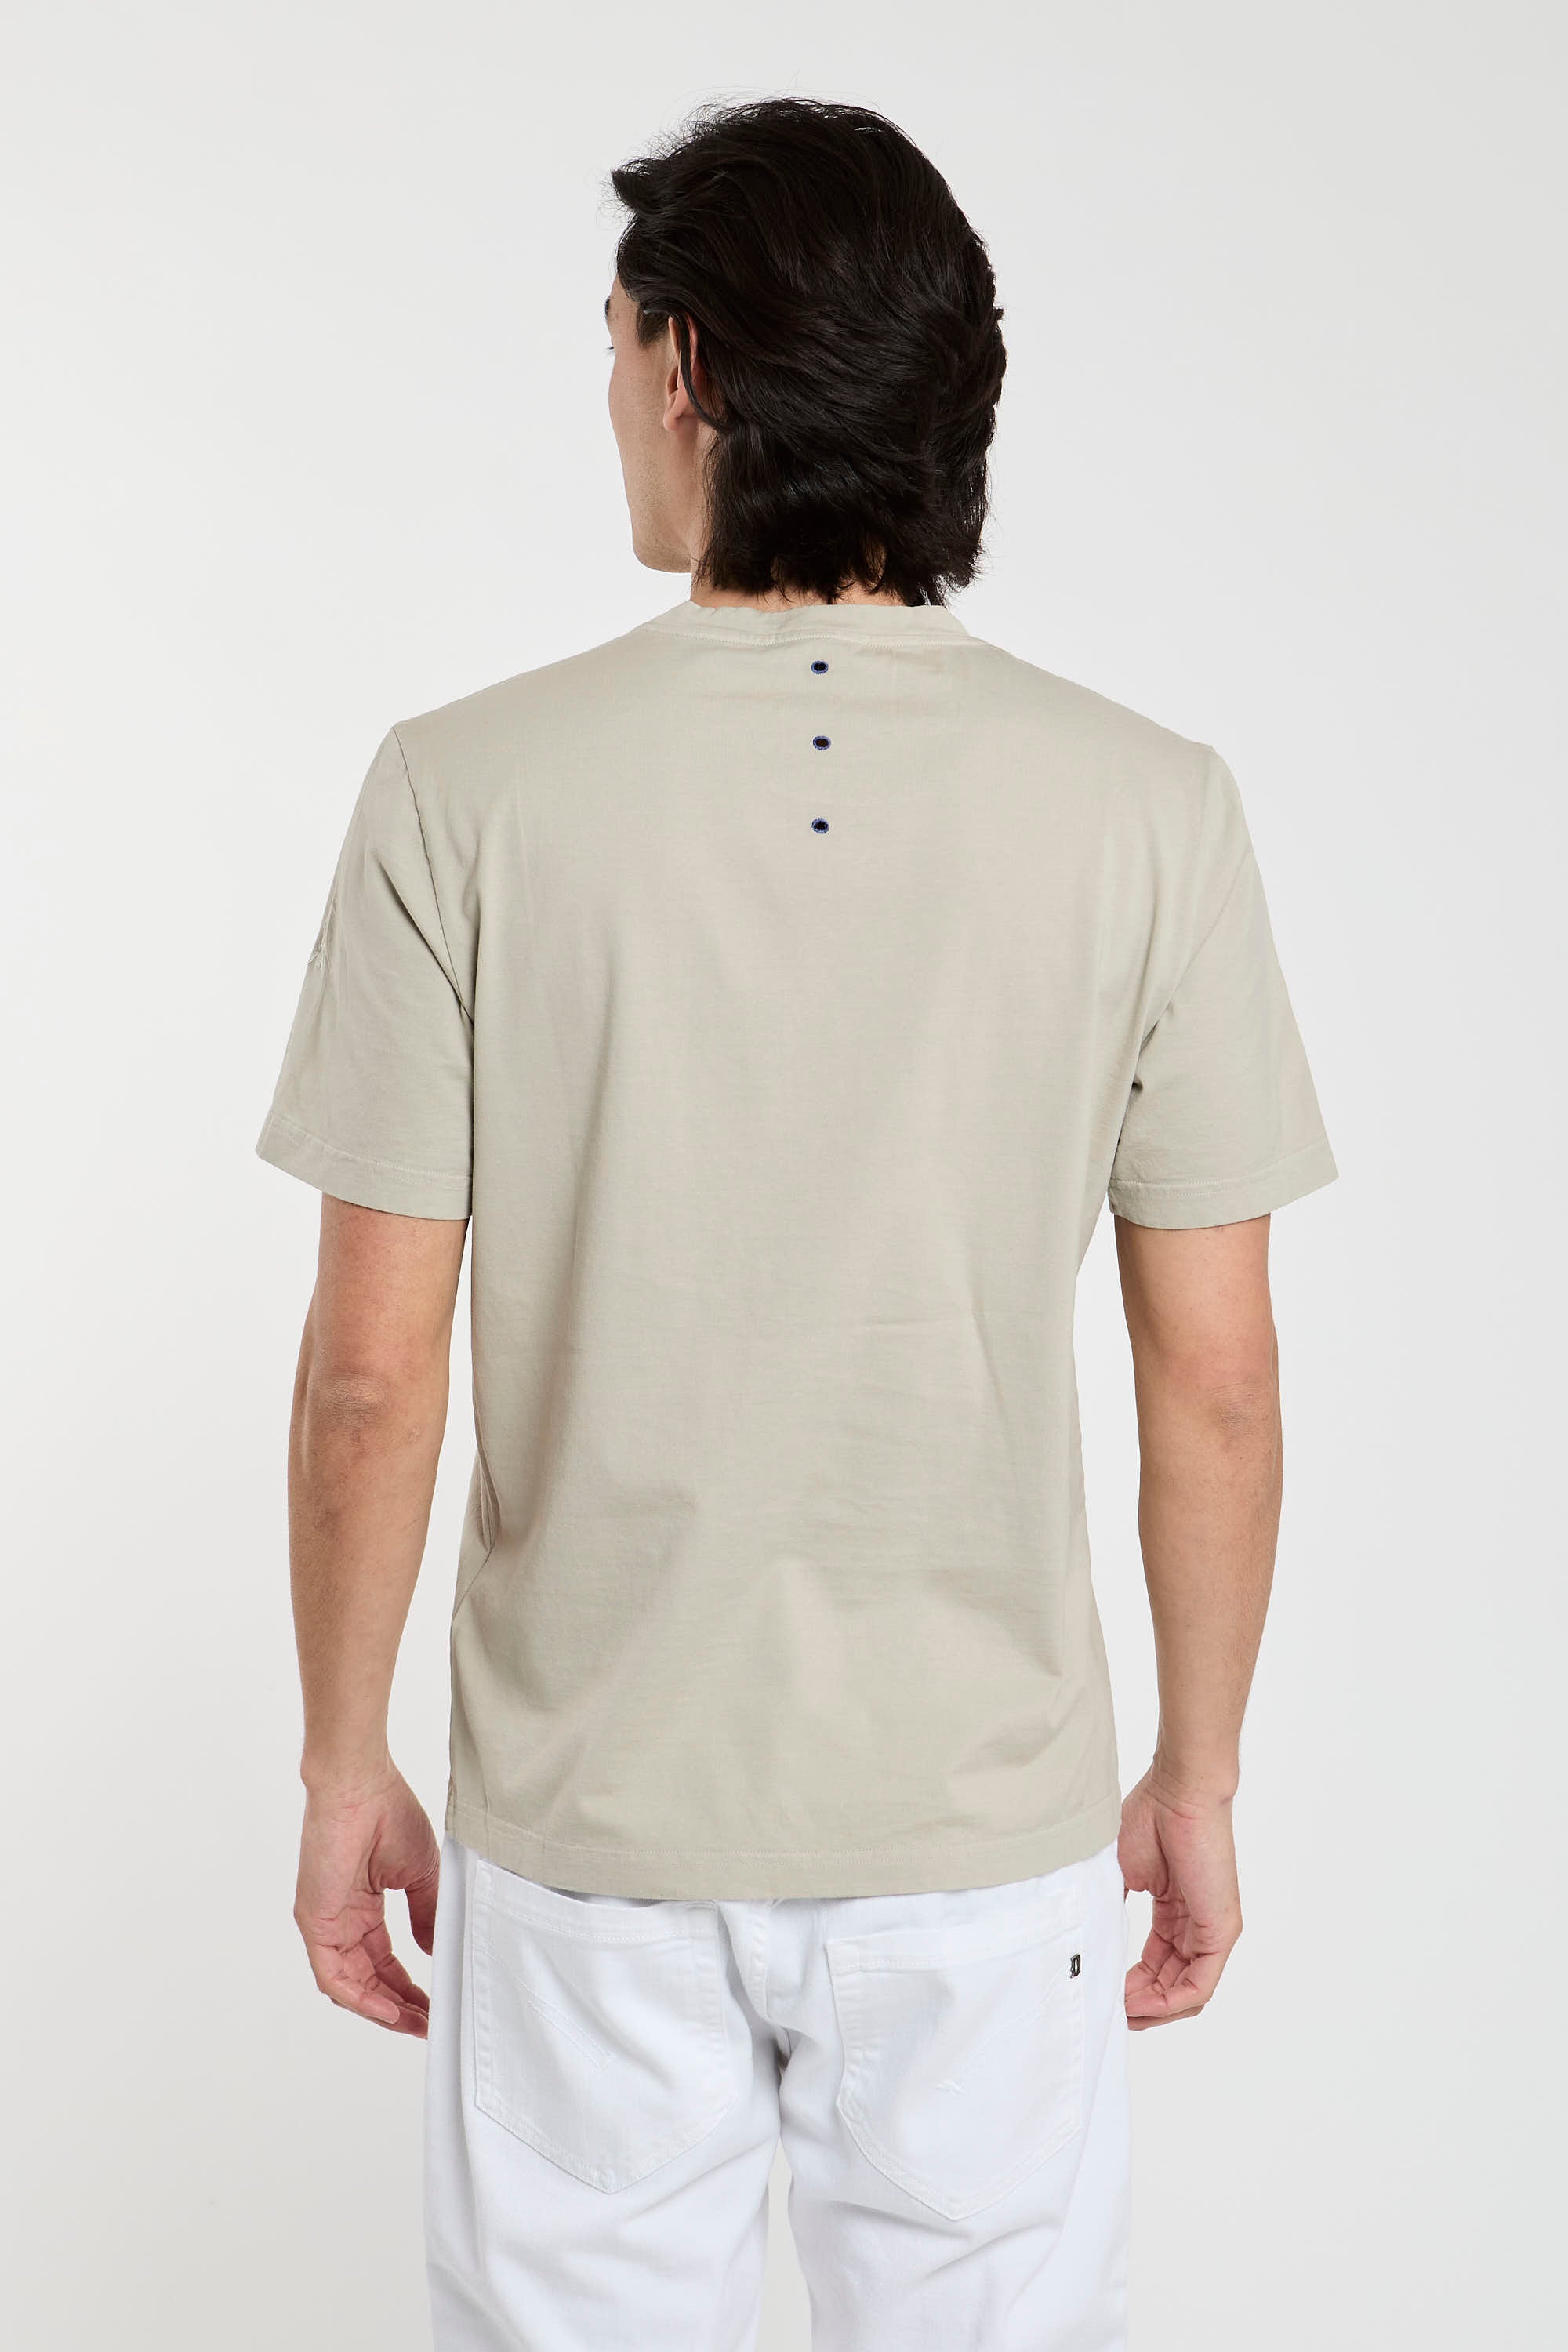 Premiata Cotton Jersey T-Shirt in Sand-3